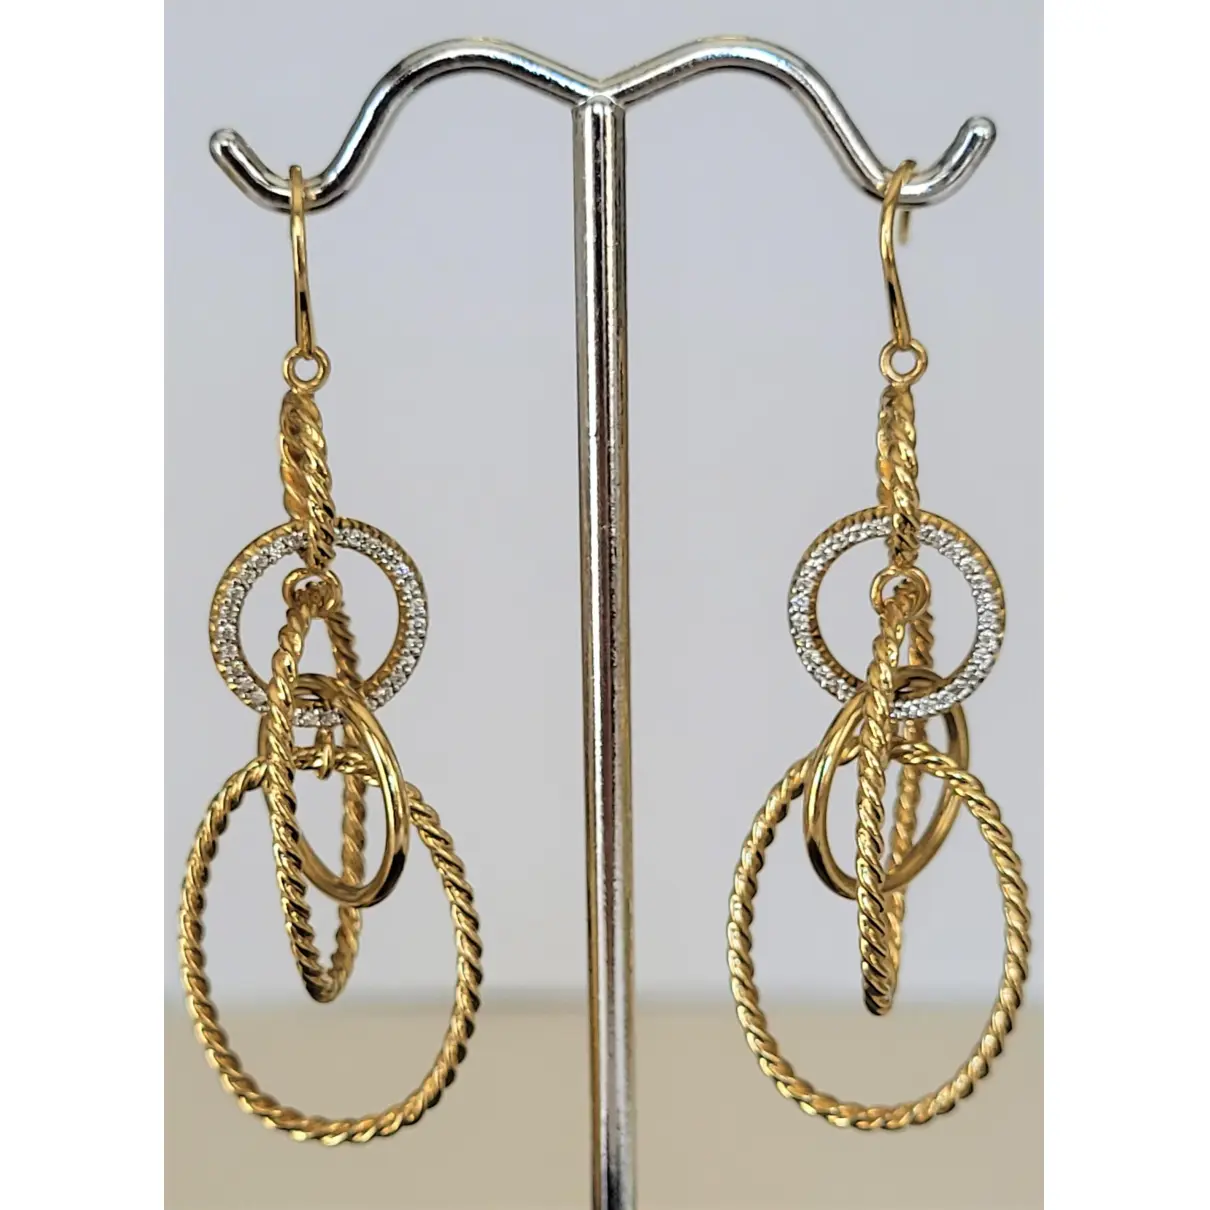 Buy David Yurman Yellow gold earrings online